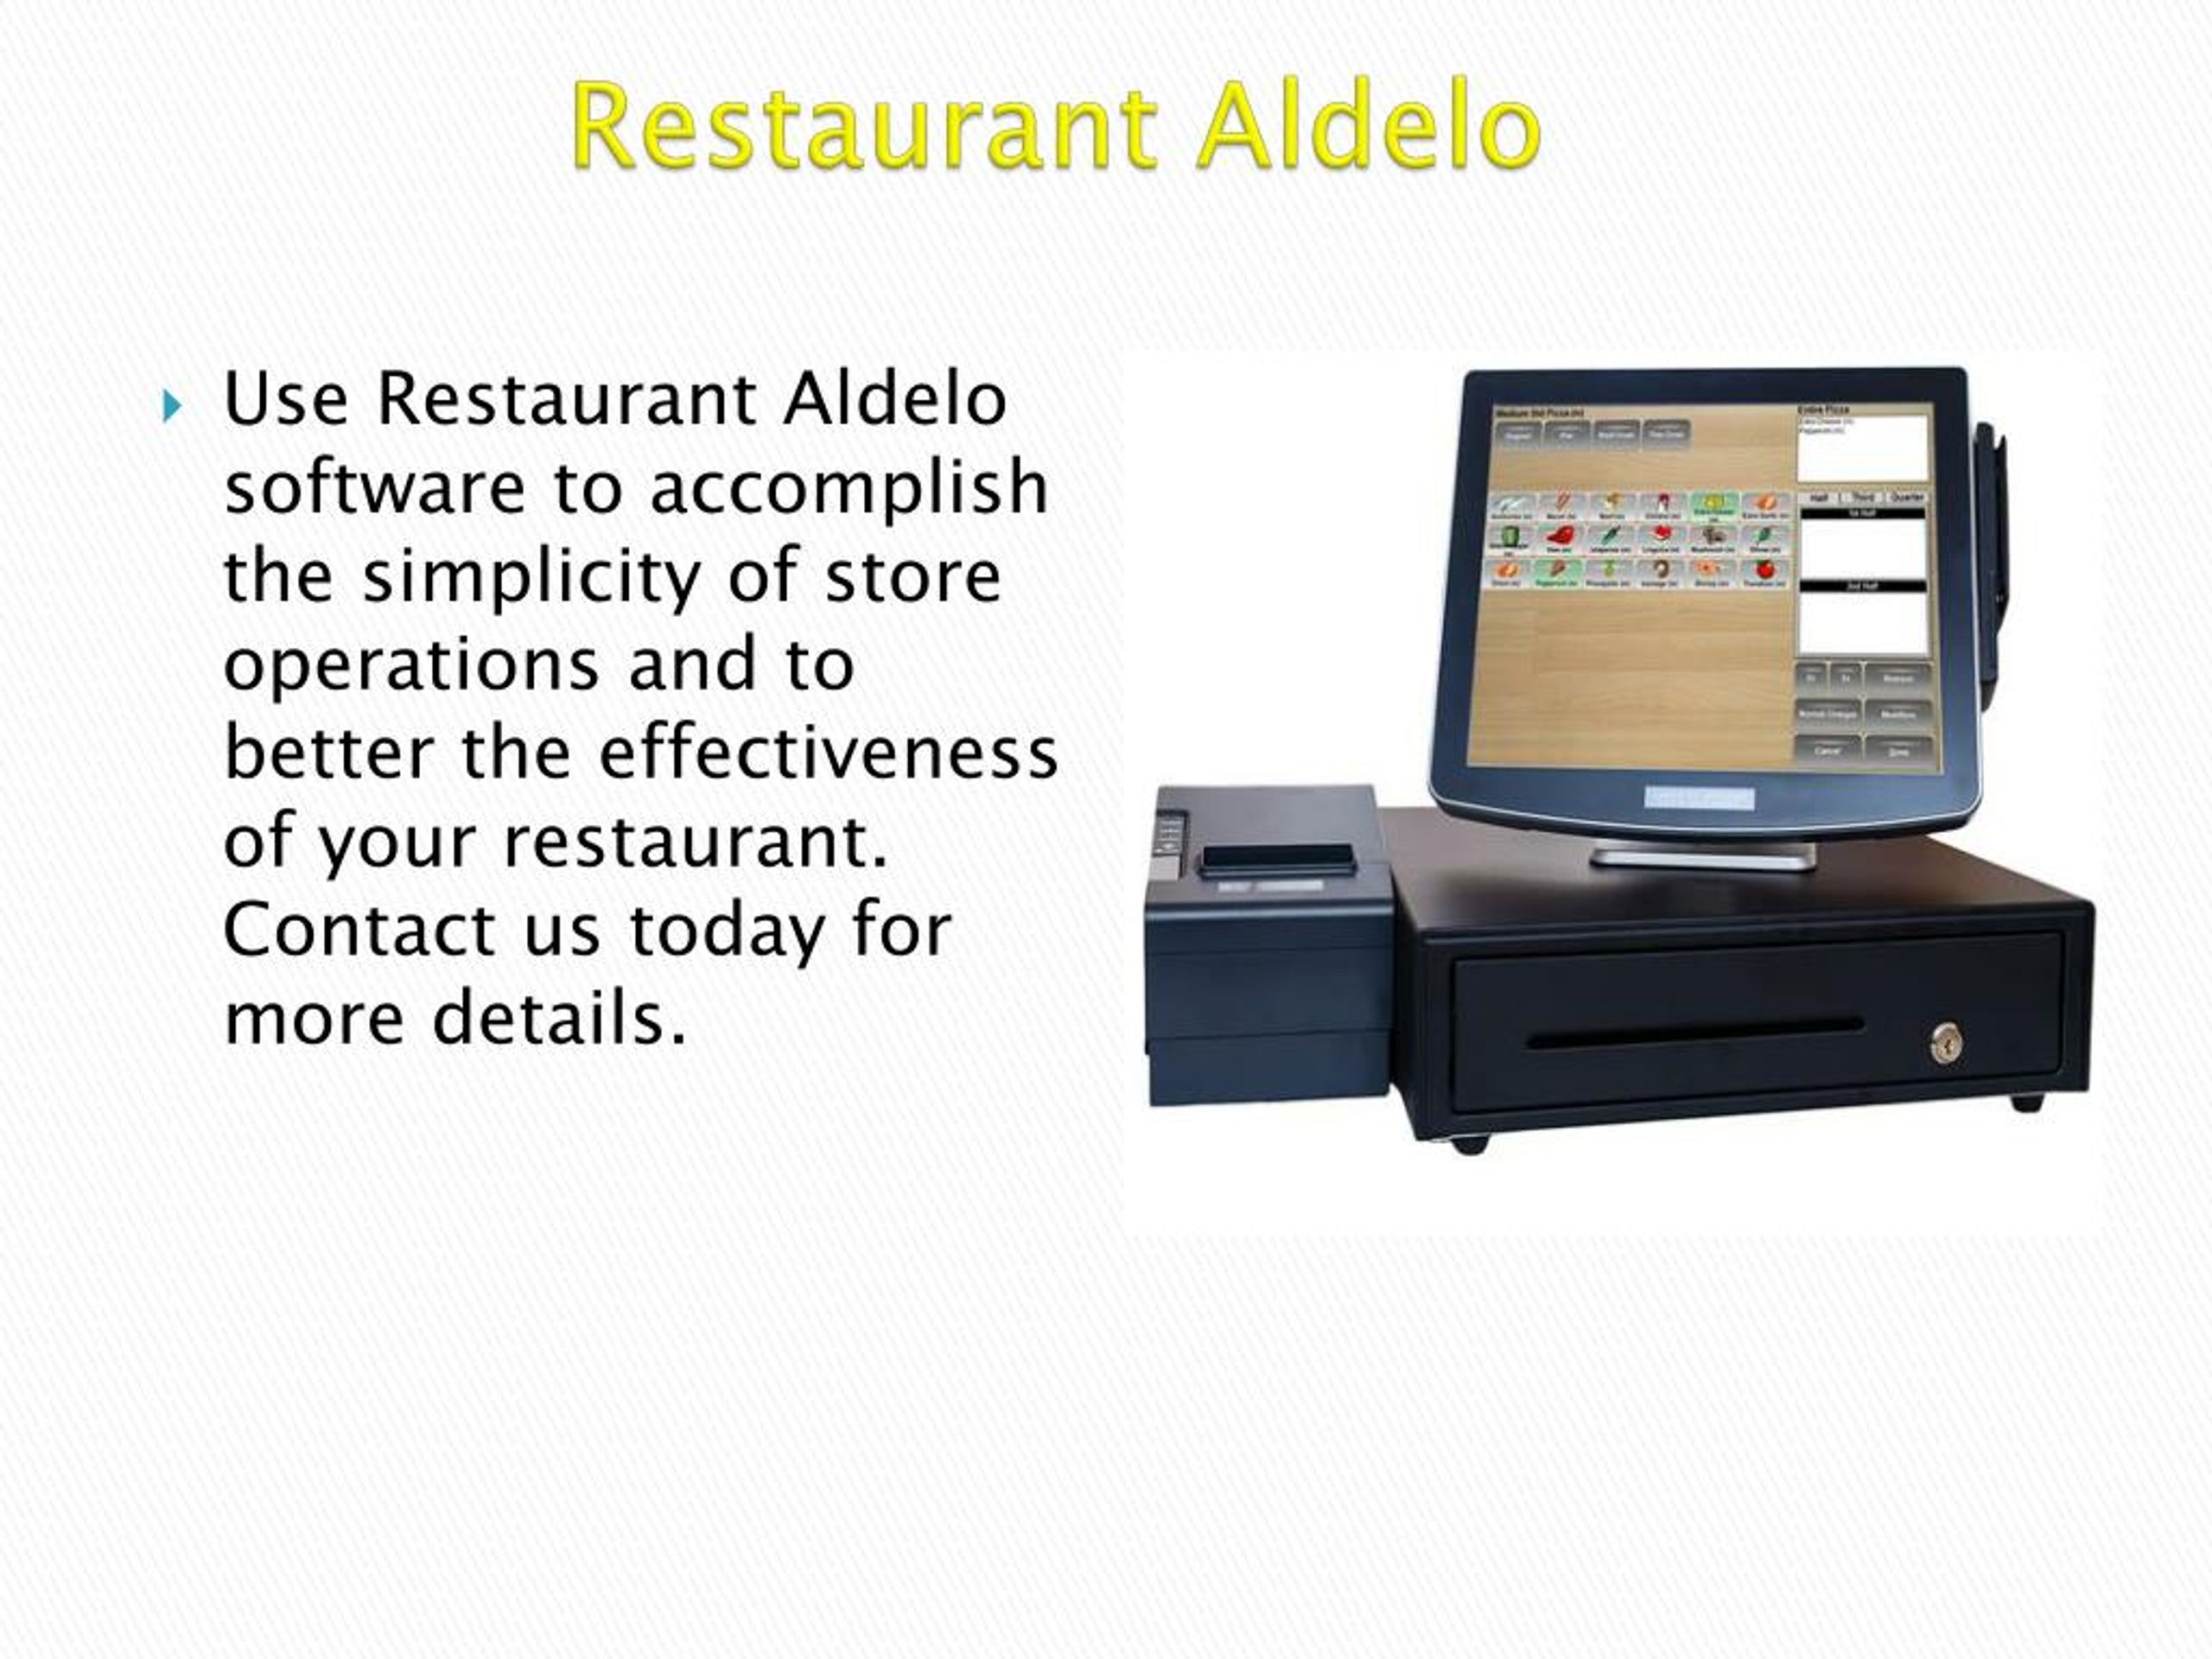 aldelo for restaurants download